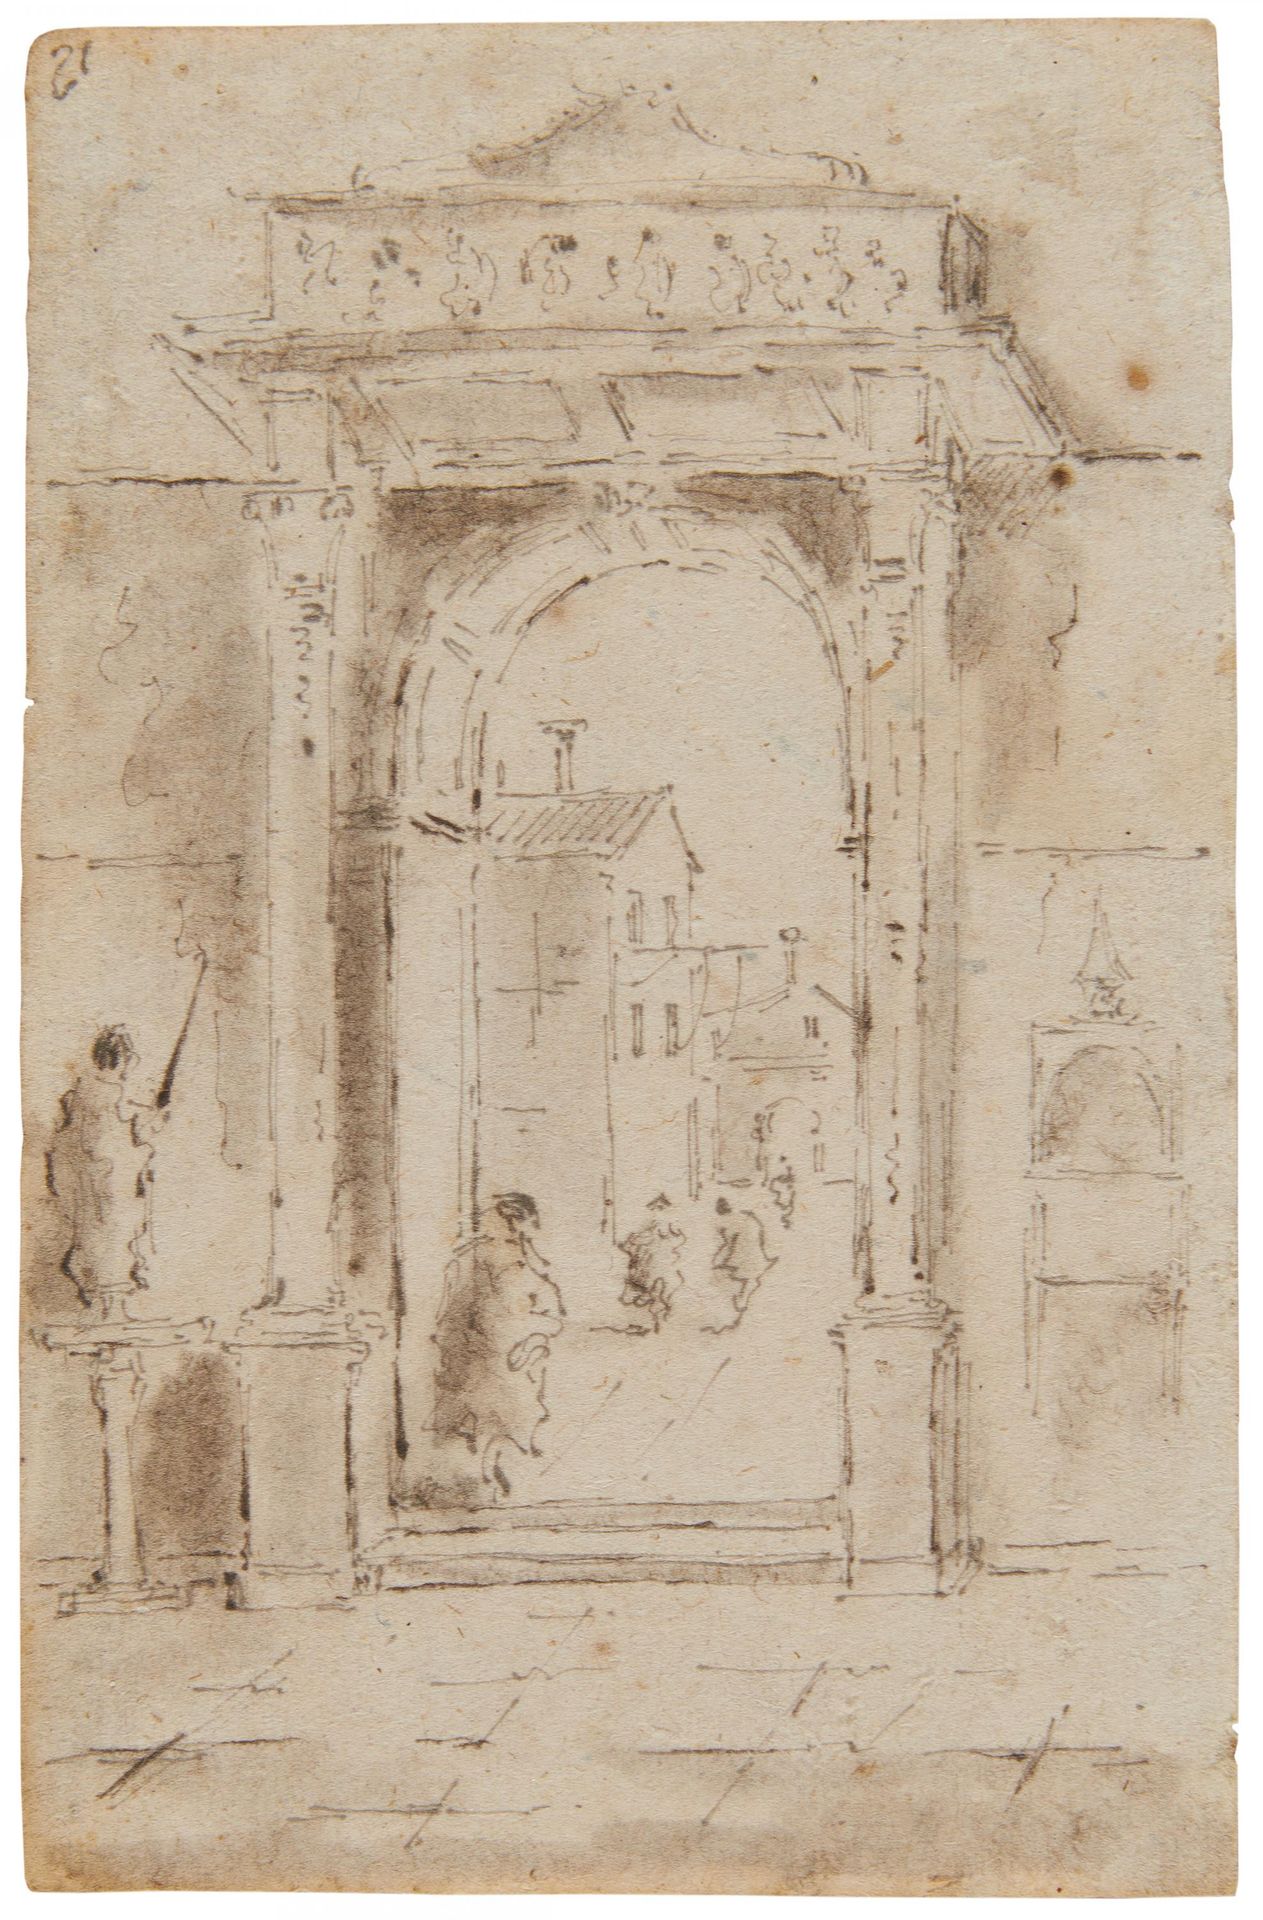 Venezianische Schule VENEZIAN SCHOOL
18世纪。
题目： 有大型门拱的城市景观。
Technique: 纸上水彩笔墨画（明信&hellip;